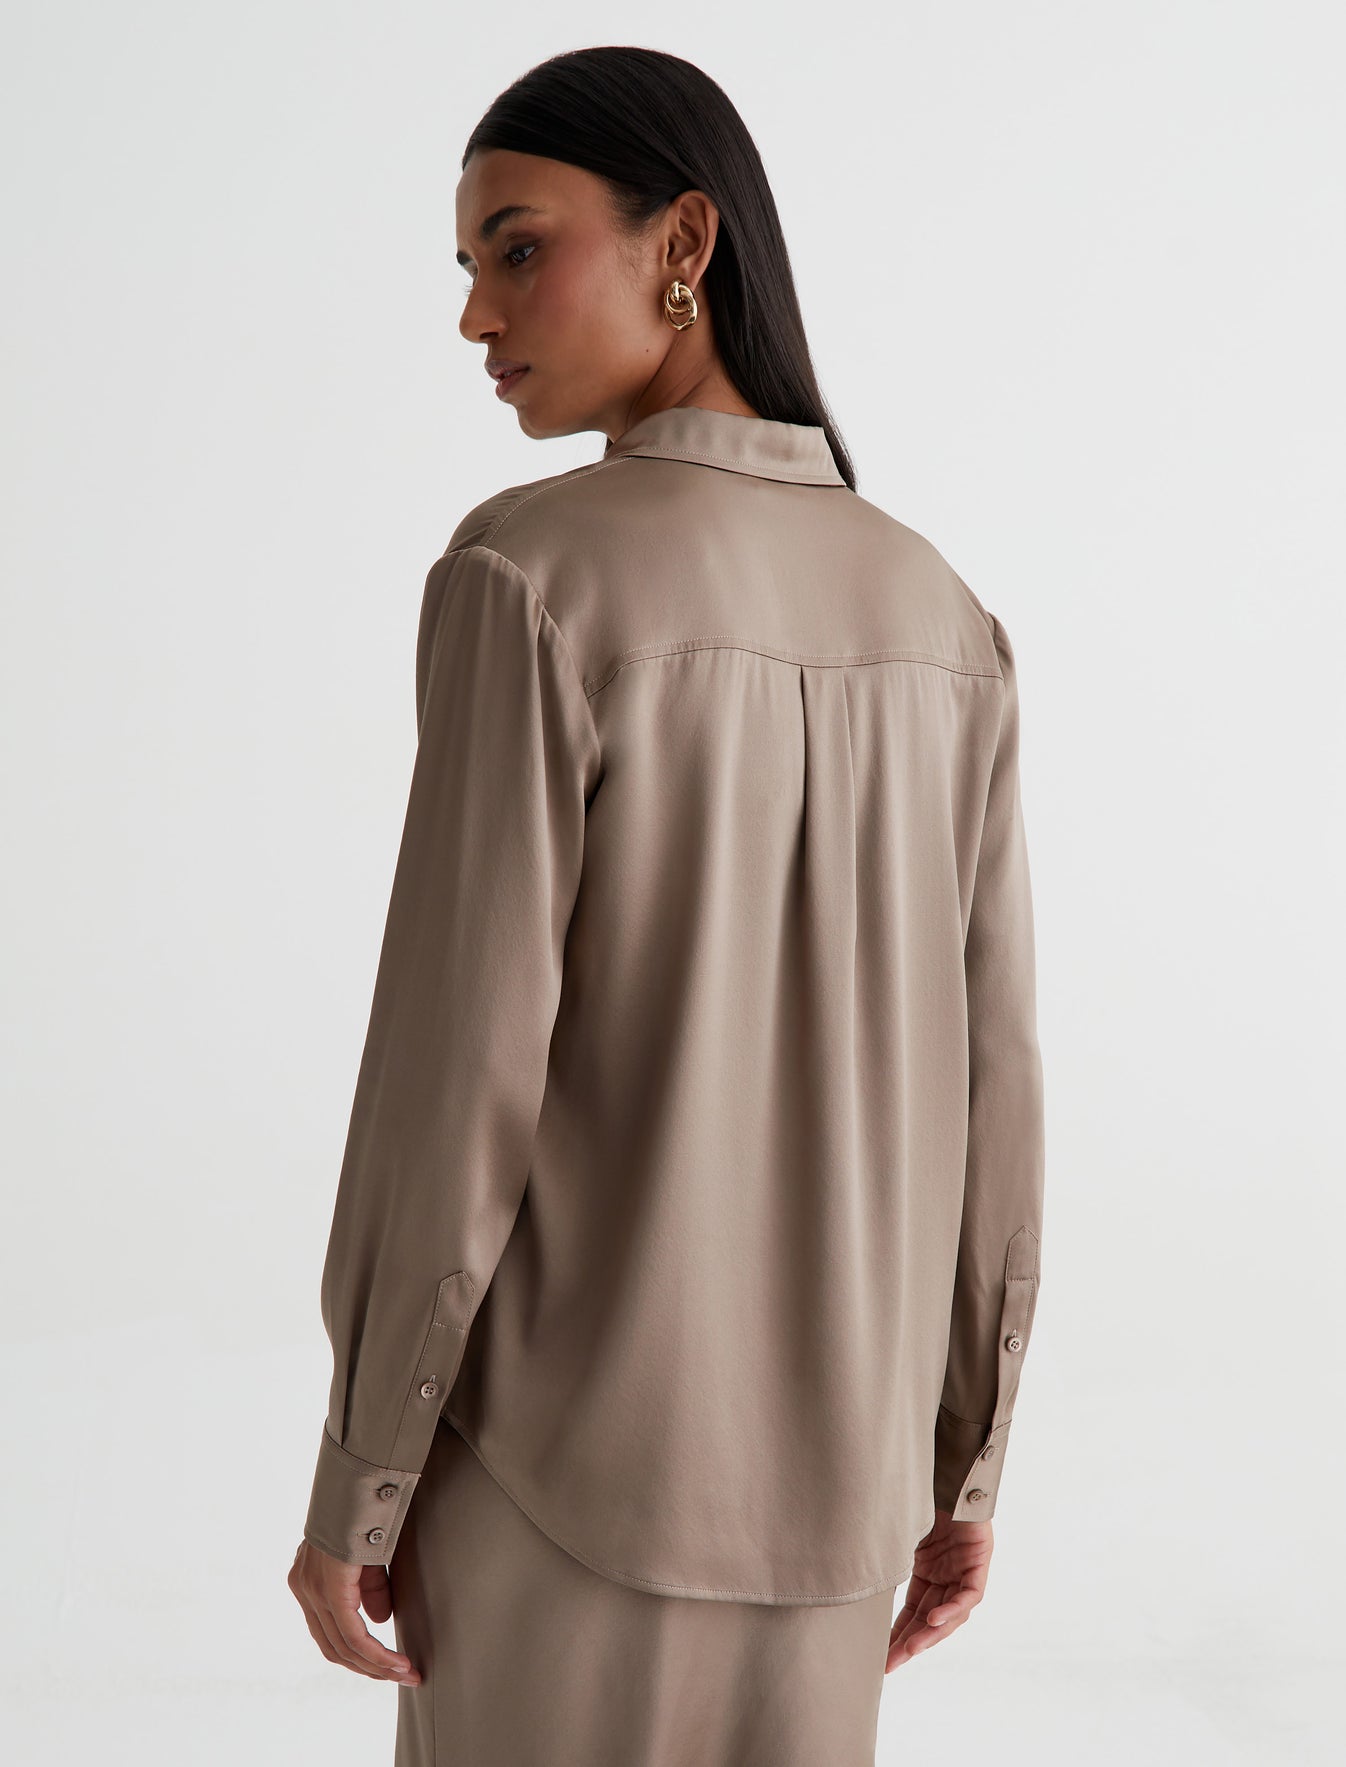 Shiela Brooklyn Taupe Relaxed Long Sleeve Button Up Shirt Women Top Photo 6